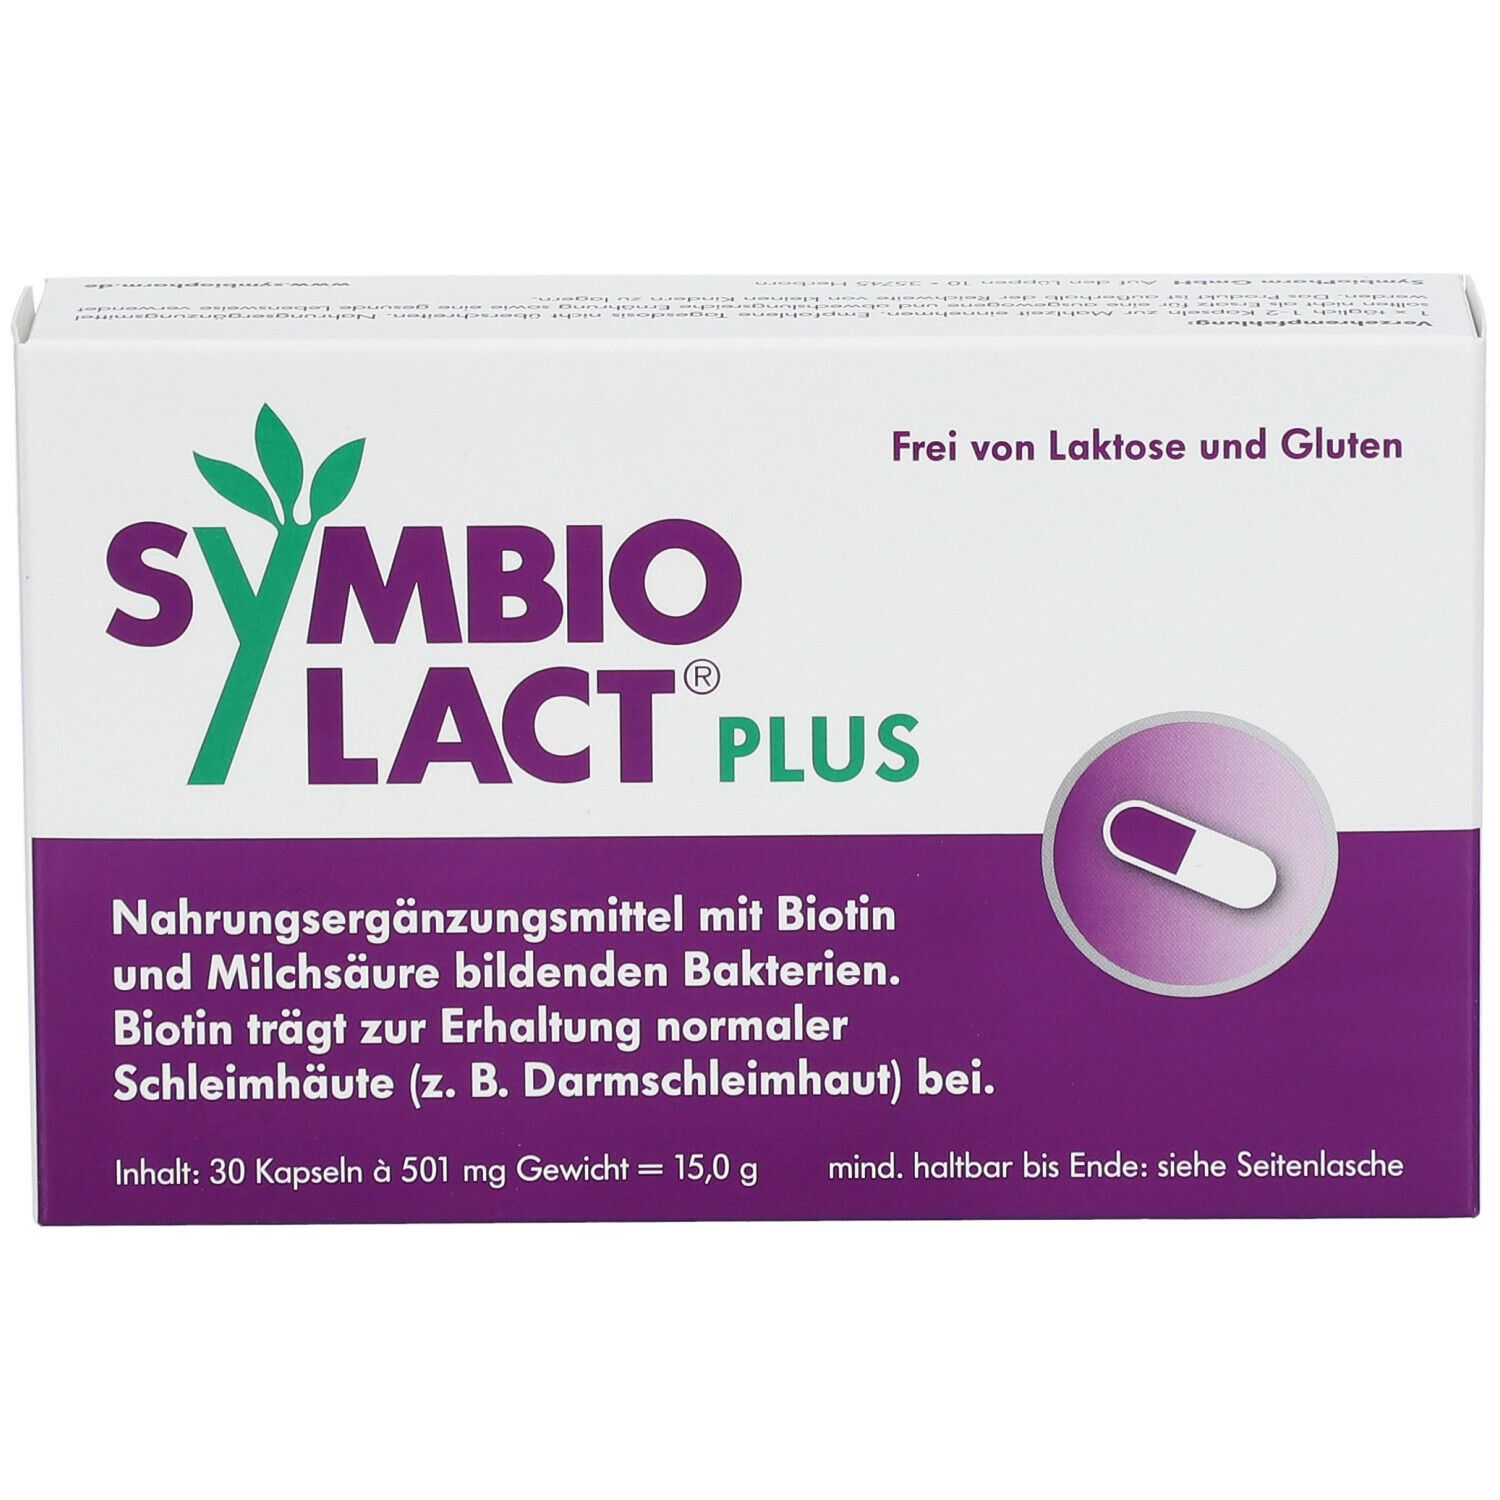 SymbioLact® Plus